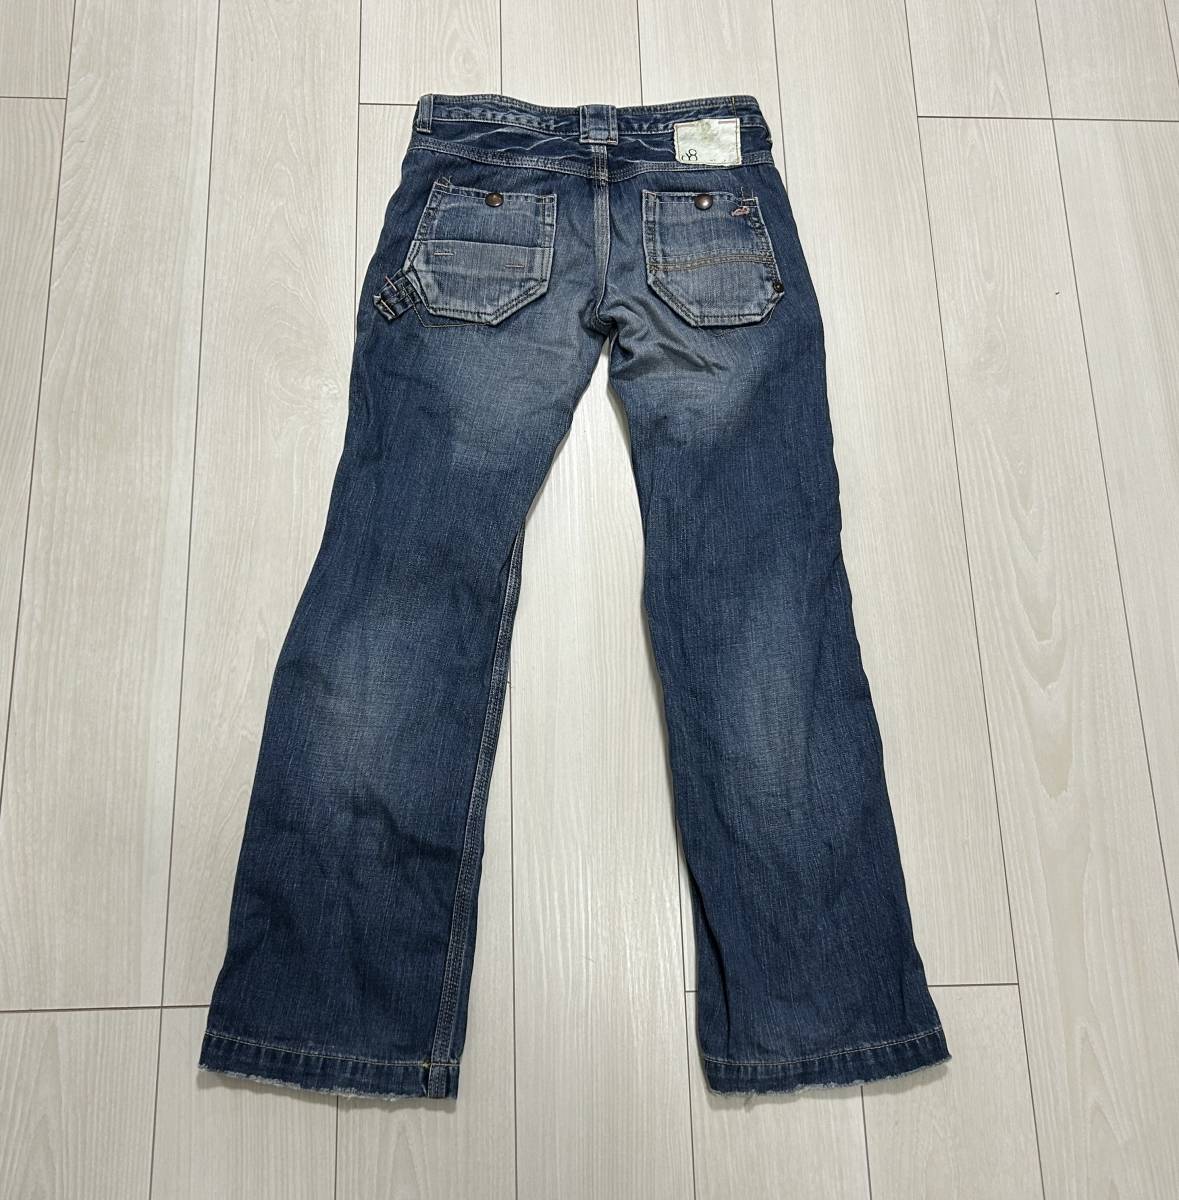 * Johnbull JOHNBULL Works Len Dahl -z buggy jeans one woshu processing jeans Denim pants S*AP584